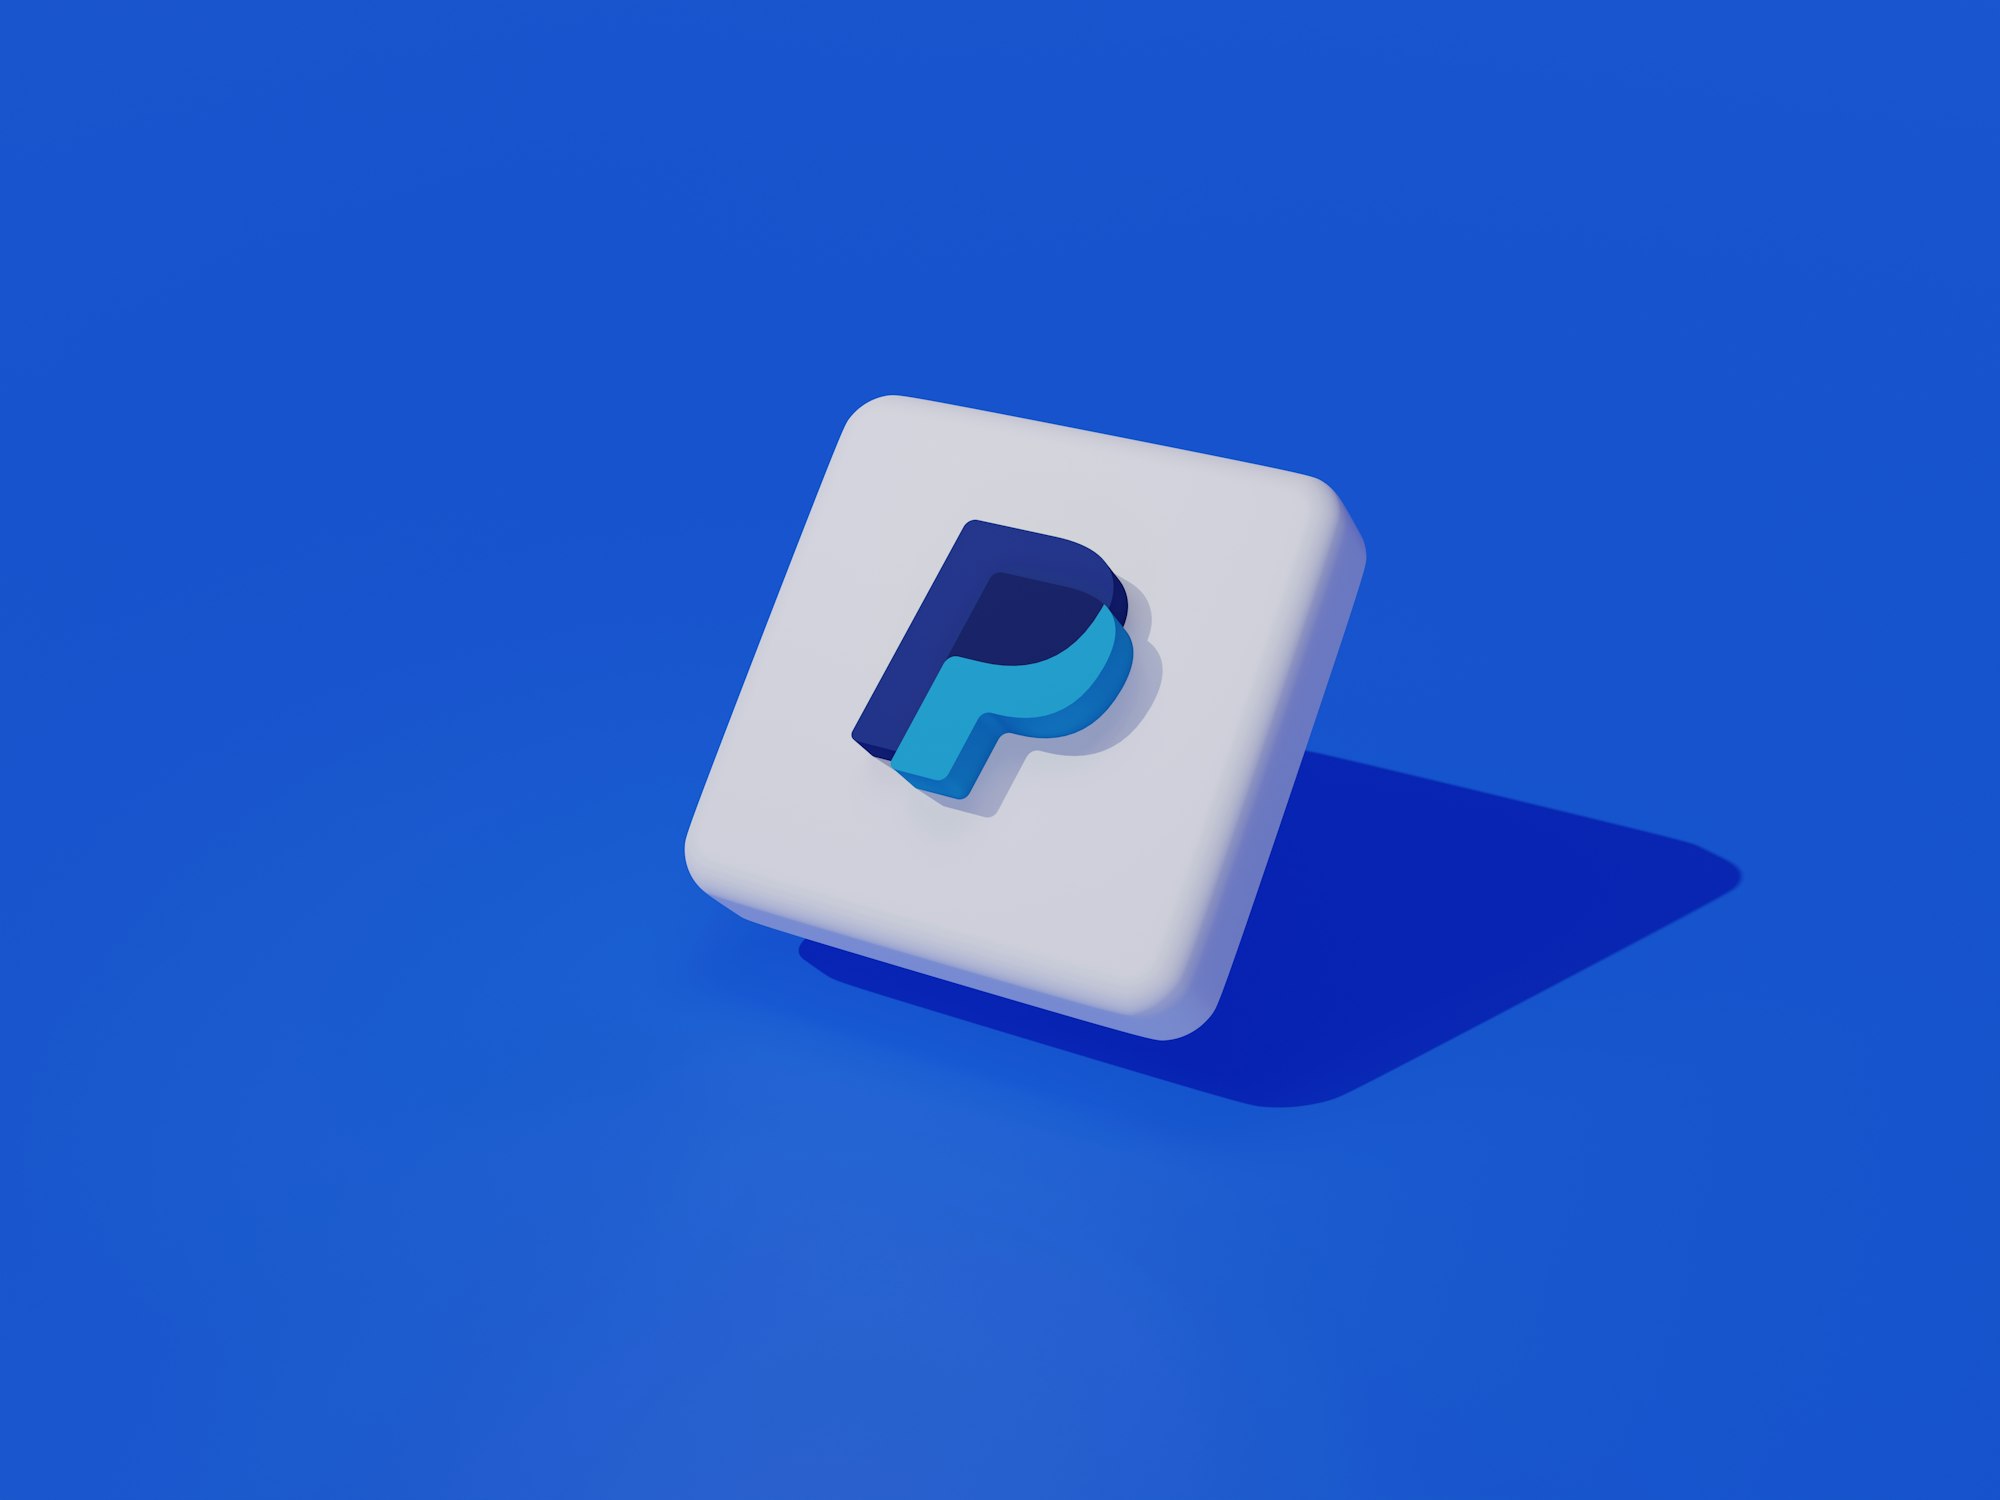 Oferta pública inicial de Stripe - Análisis de PayPal (acciones PYPL) frente a Adyen